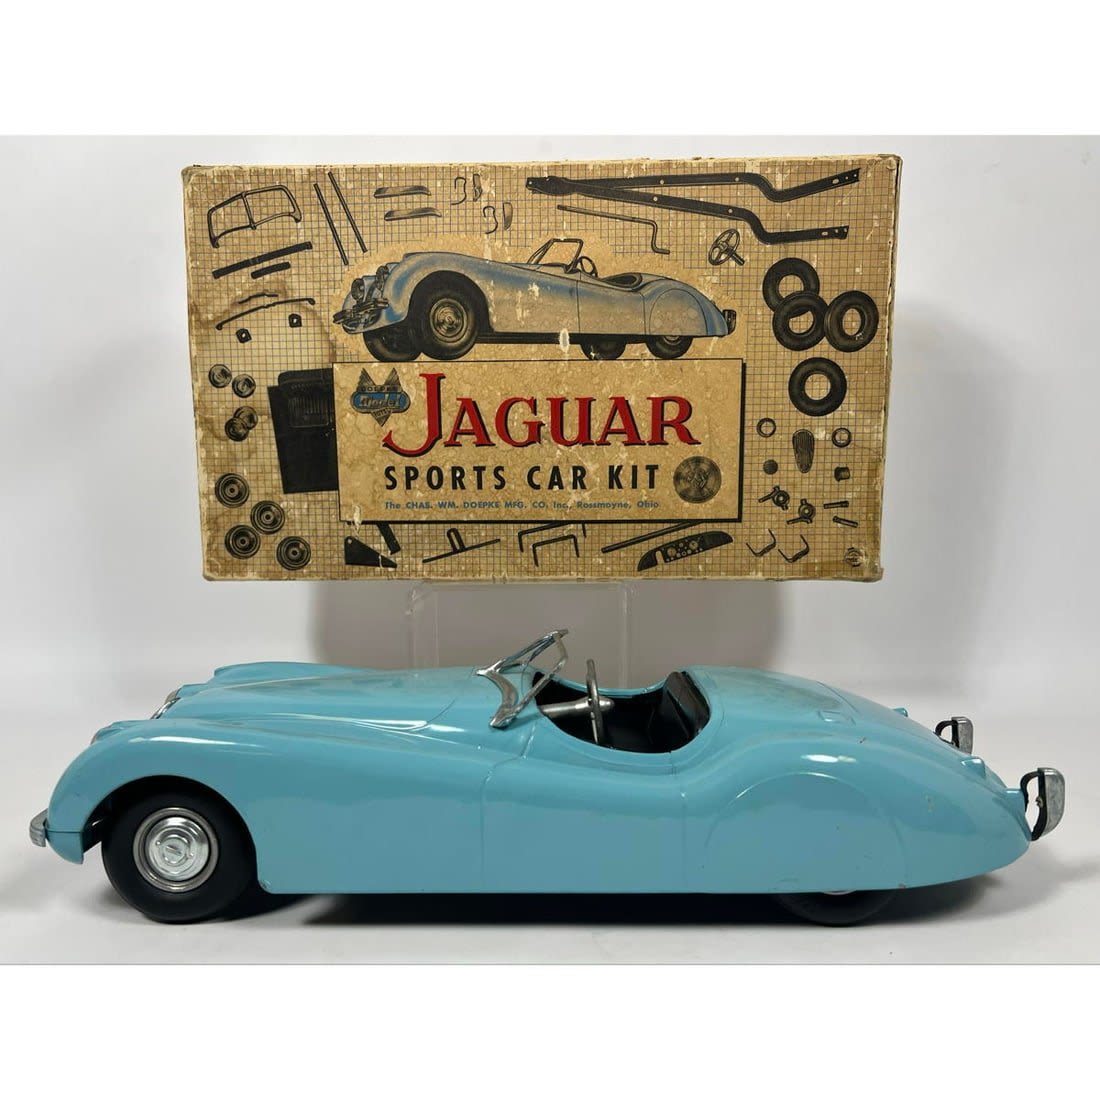 JAGUAR Sports Car Model Kit. Original